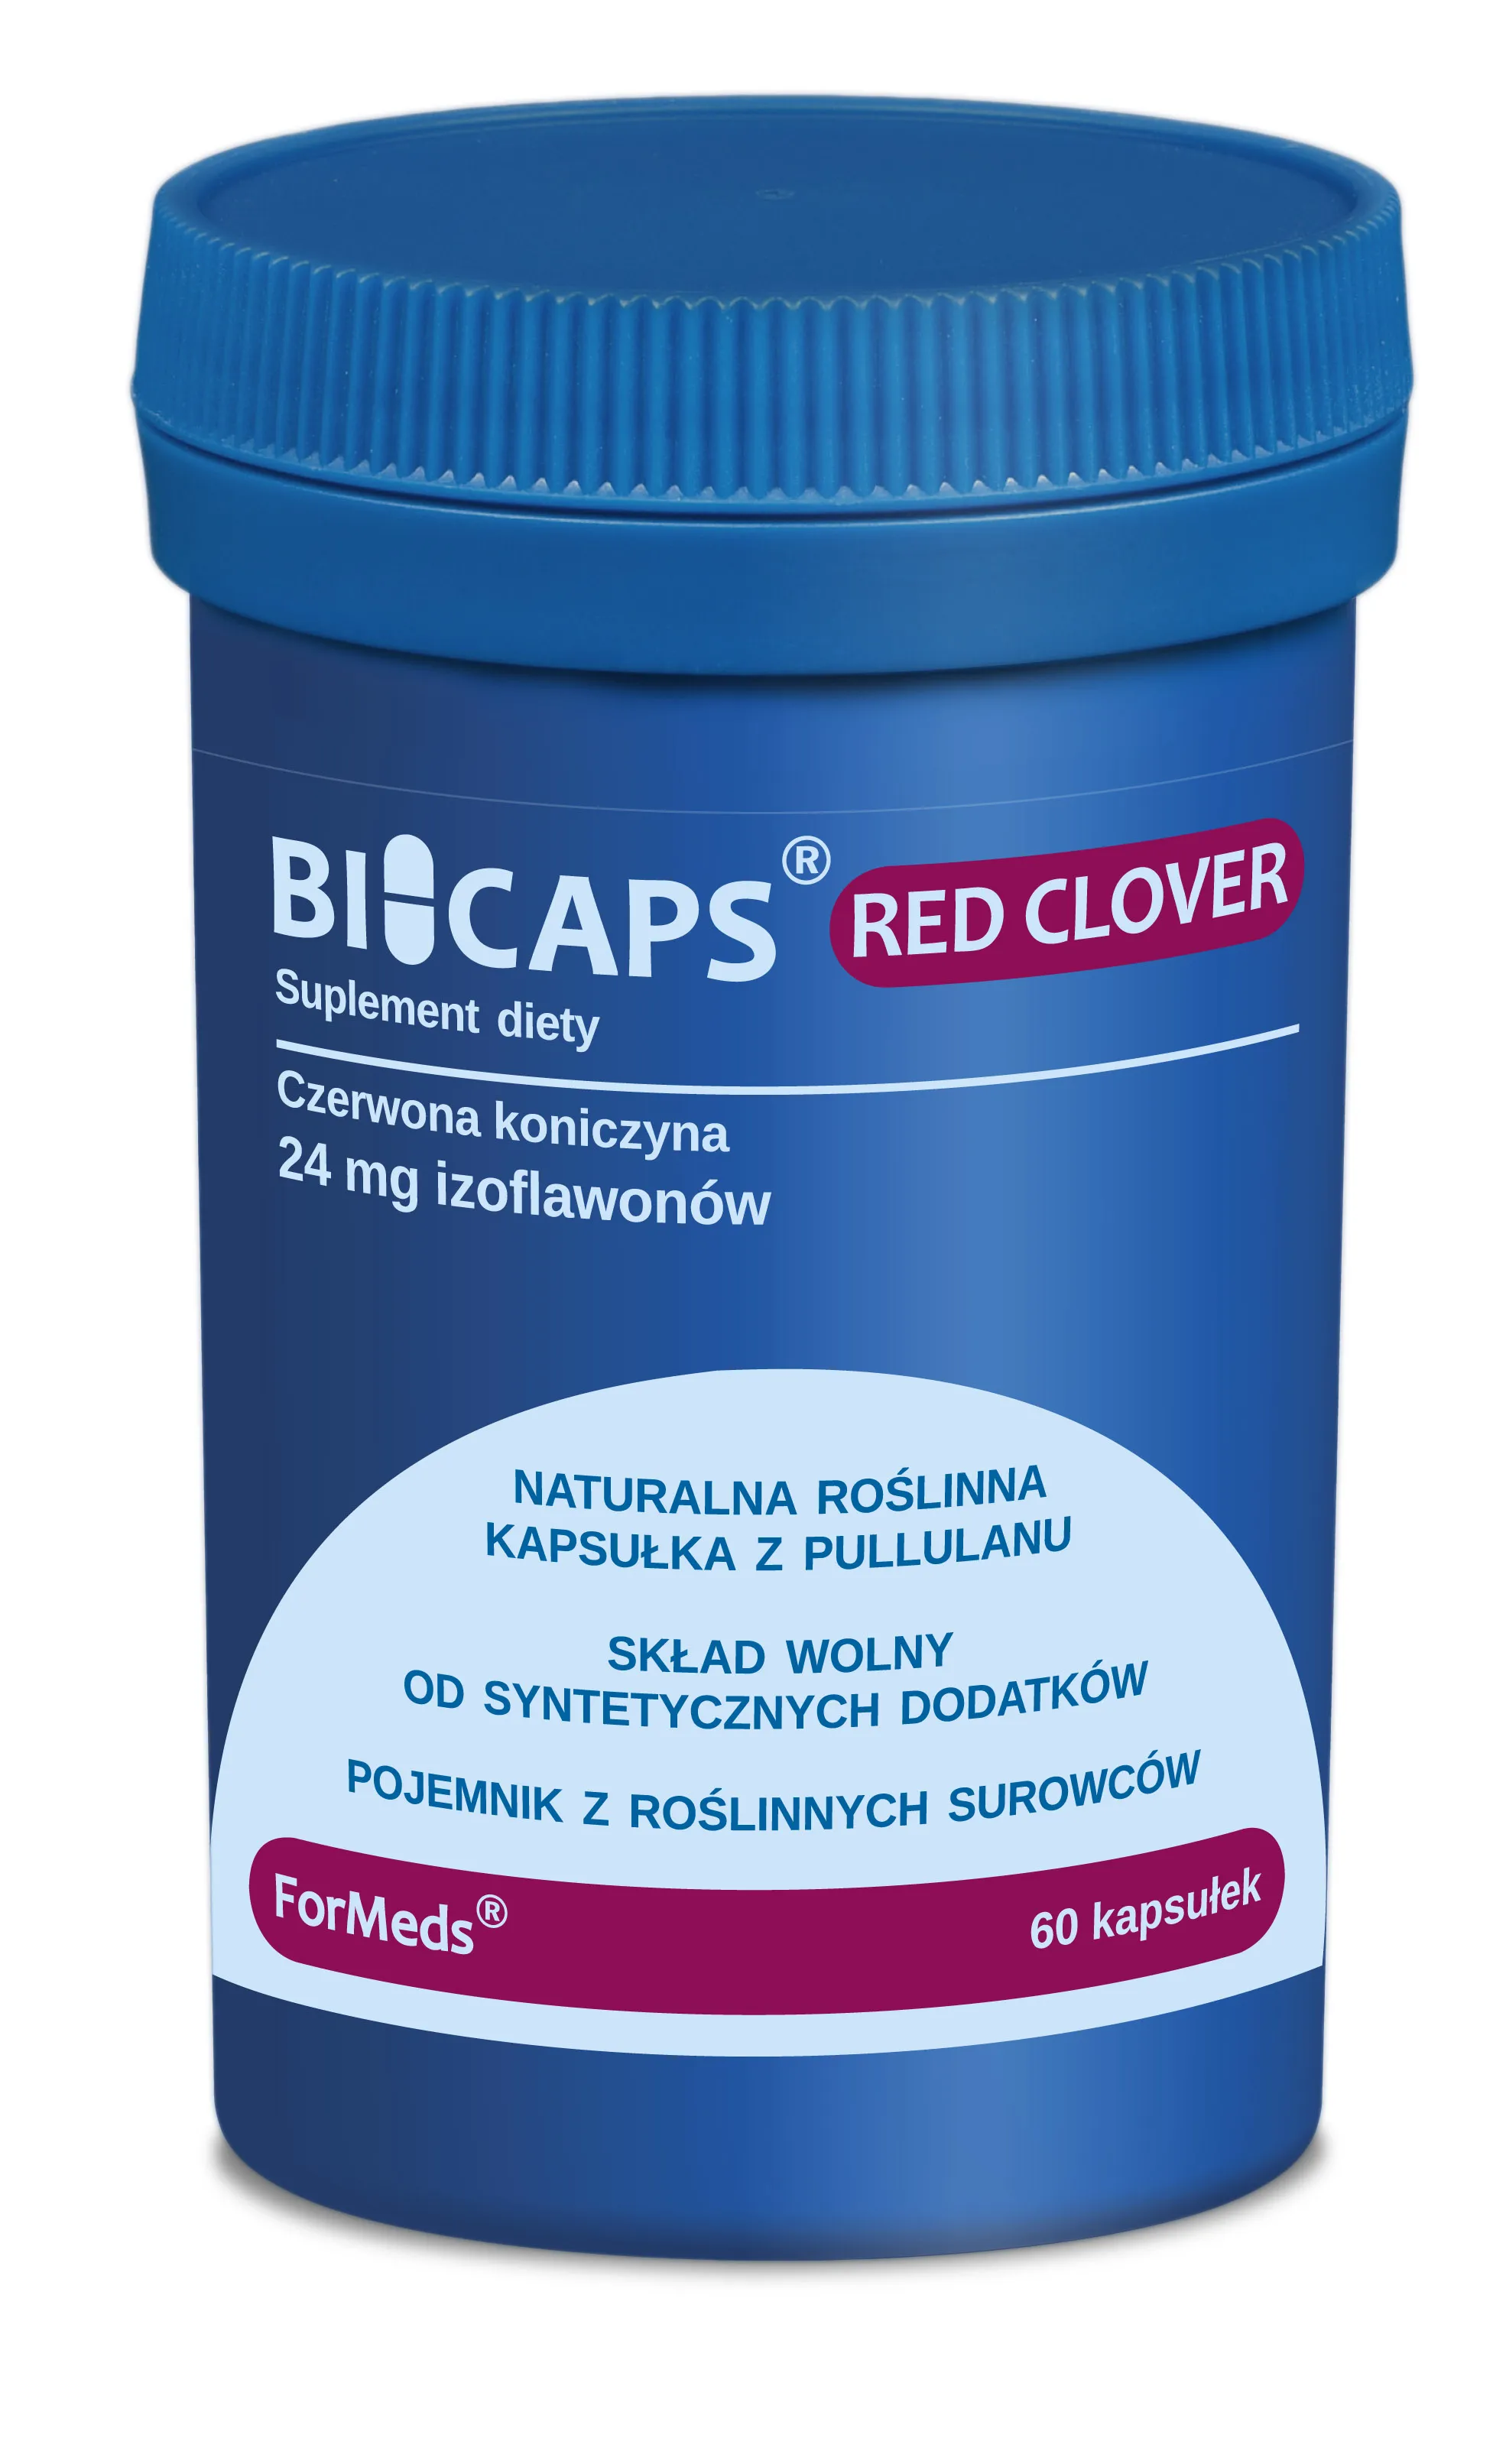 ForMeds Bicaps Red Clover, suplement diety, 60 kapsułek